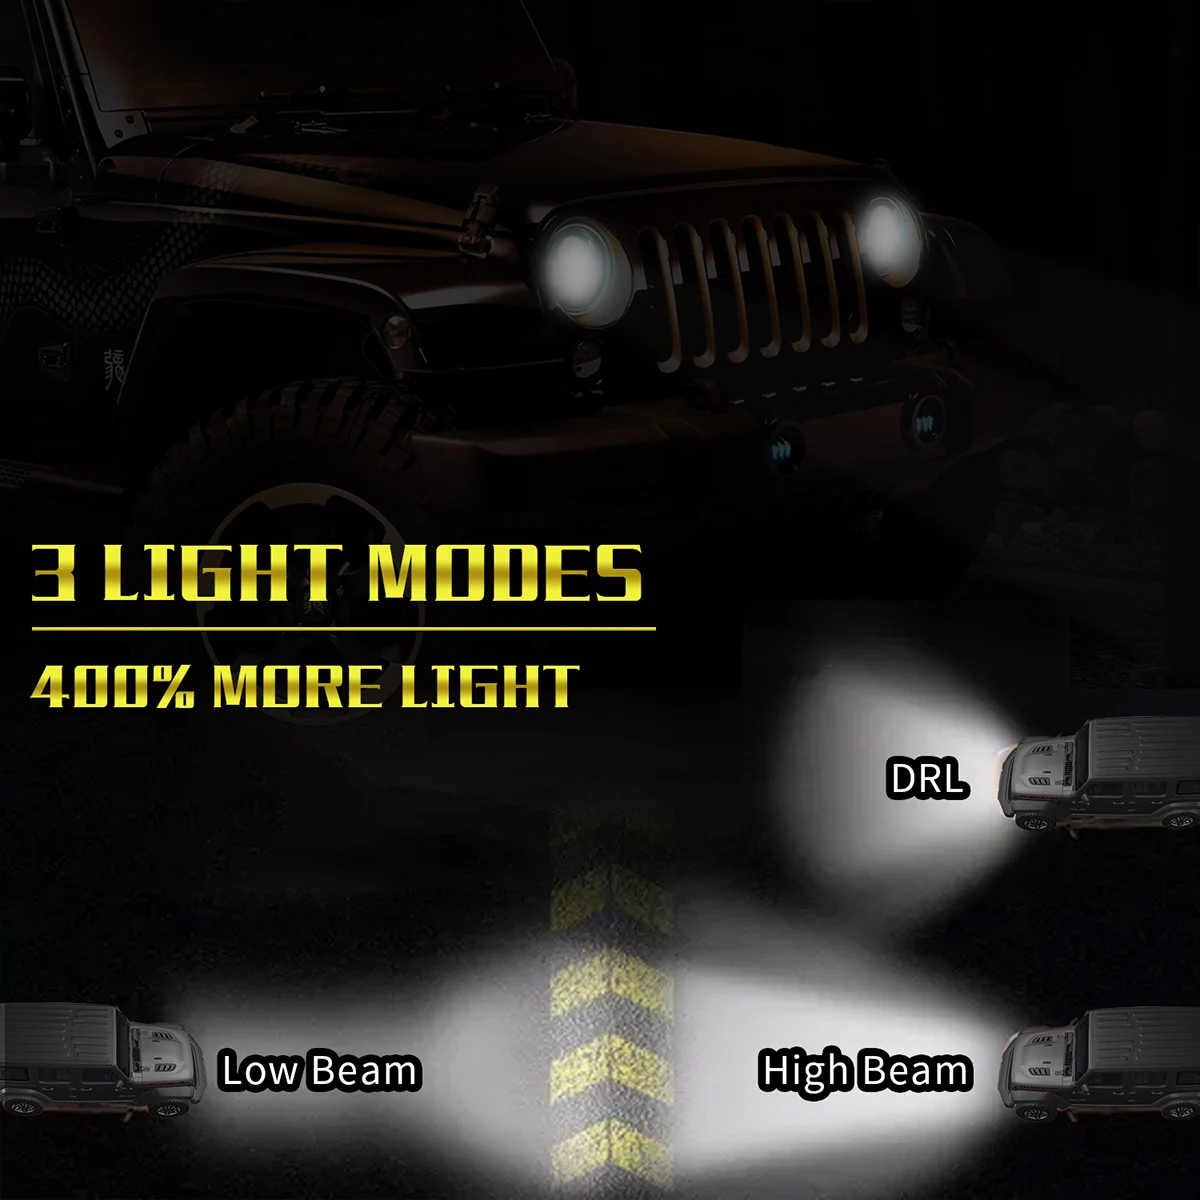 

1PC 7 Inch 150W/300W LED Headlight Super Bright Light Head Lamp for Jeep Wrangler JK TJ CJ Built-In EMC For Anti-Glare